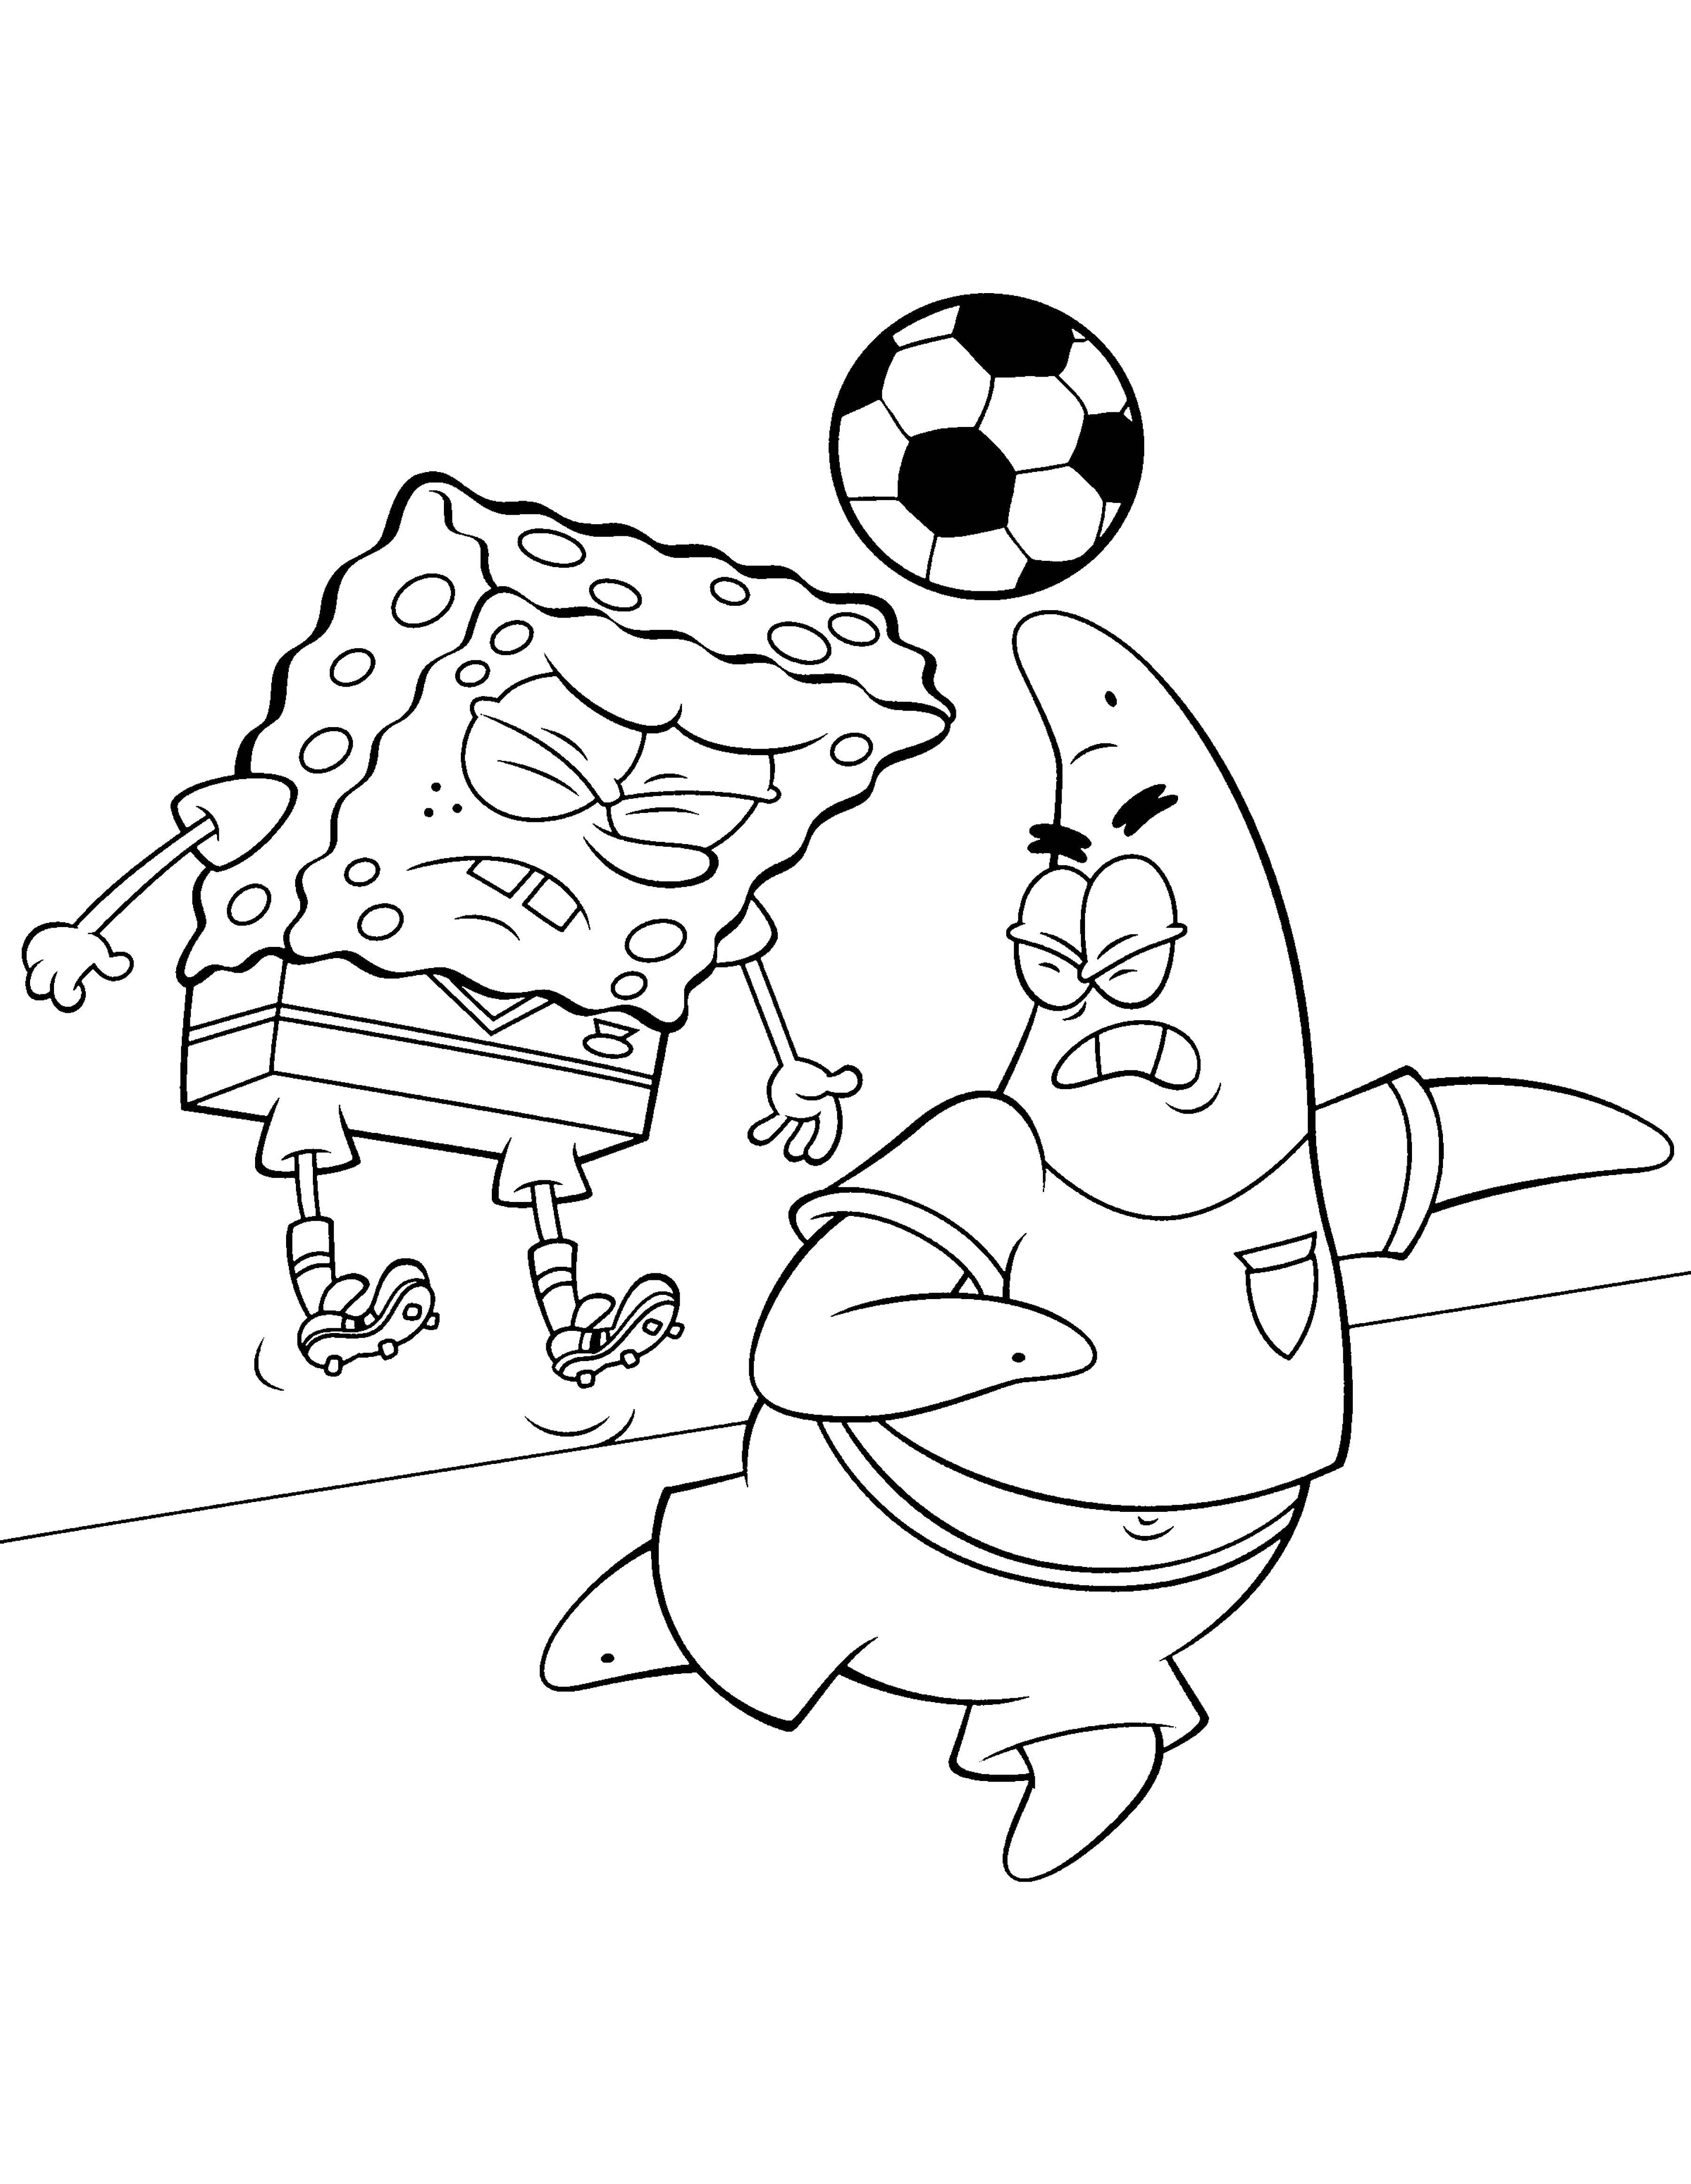 Coloring Spongebob and Patrick playing football. Category Sports. Tags:  Cartoon character, spongebob, spongebob, Patrick.